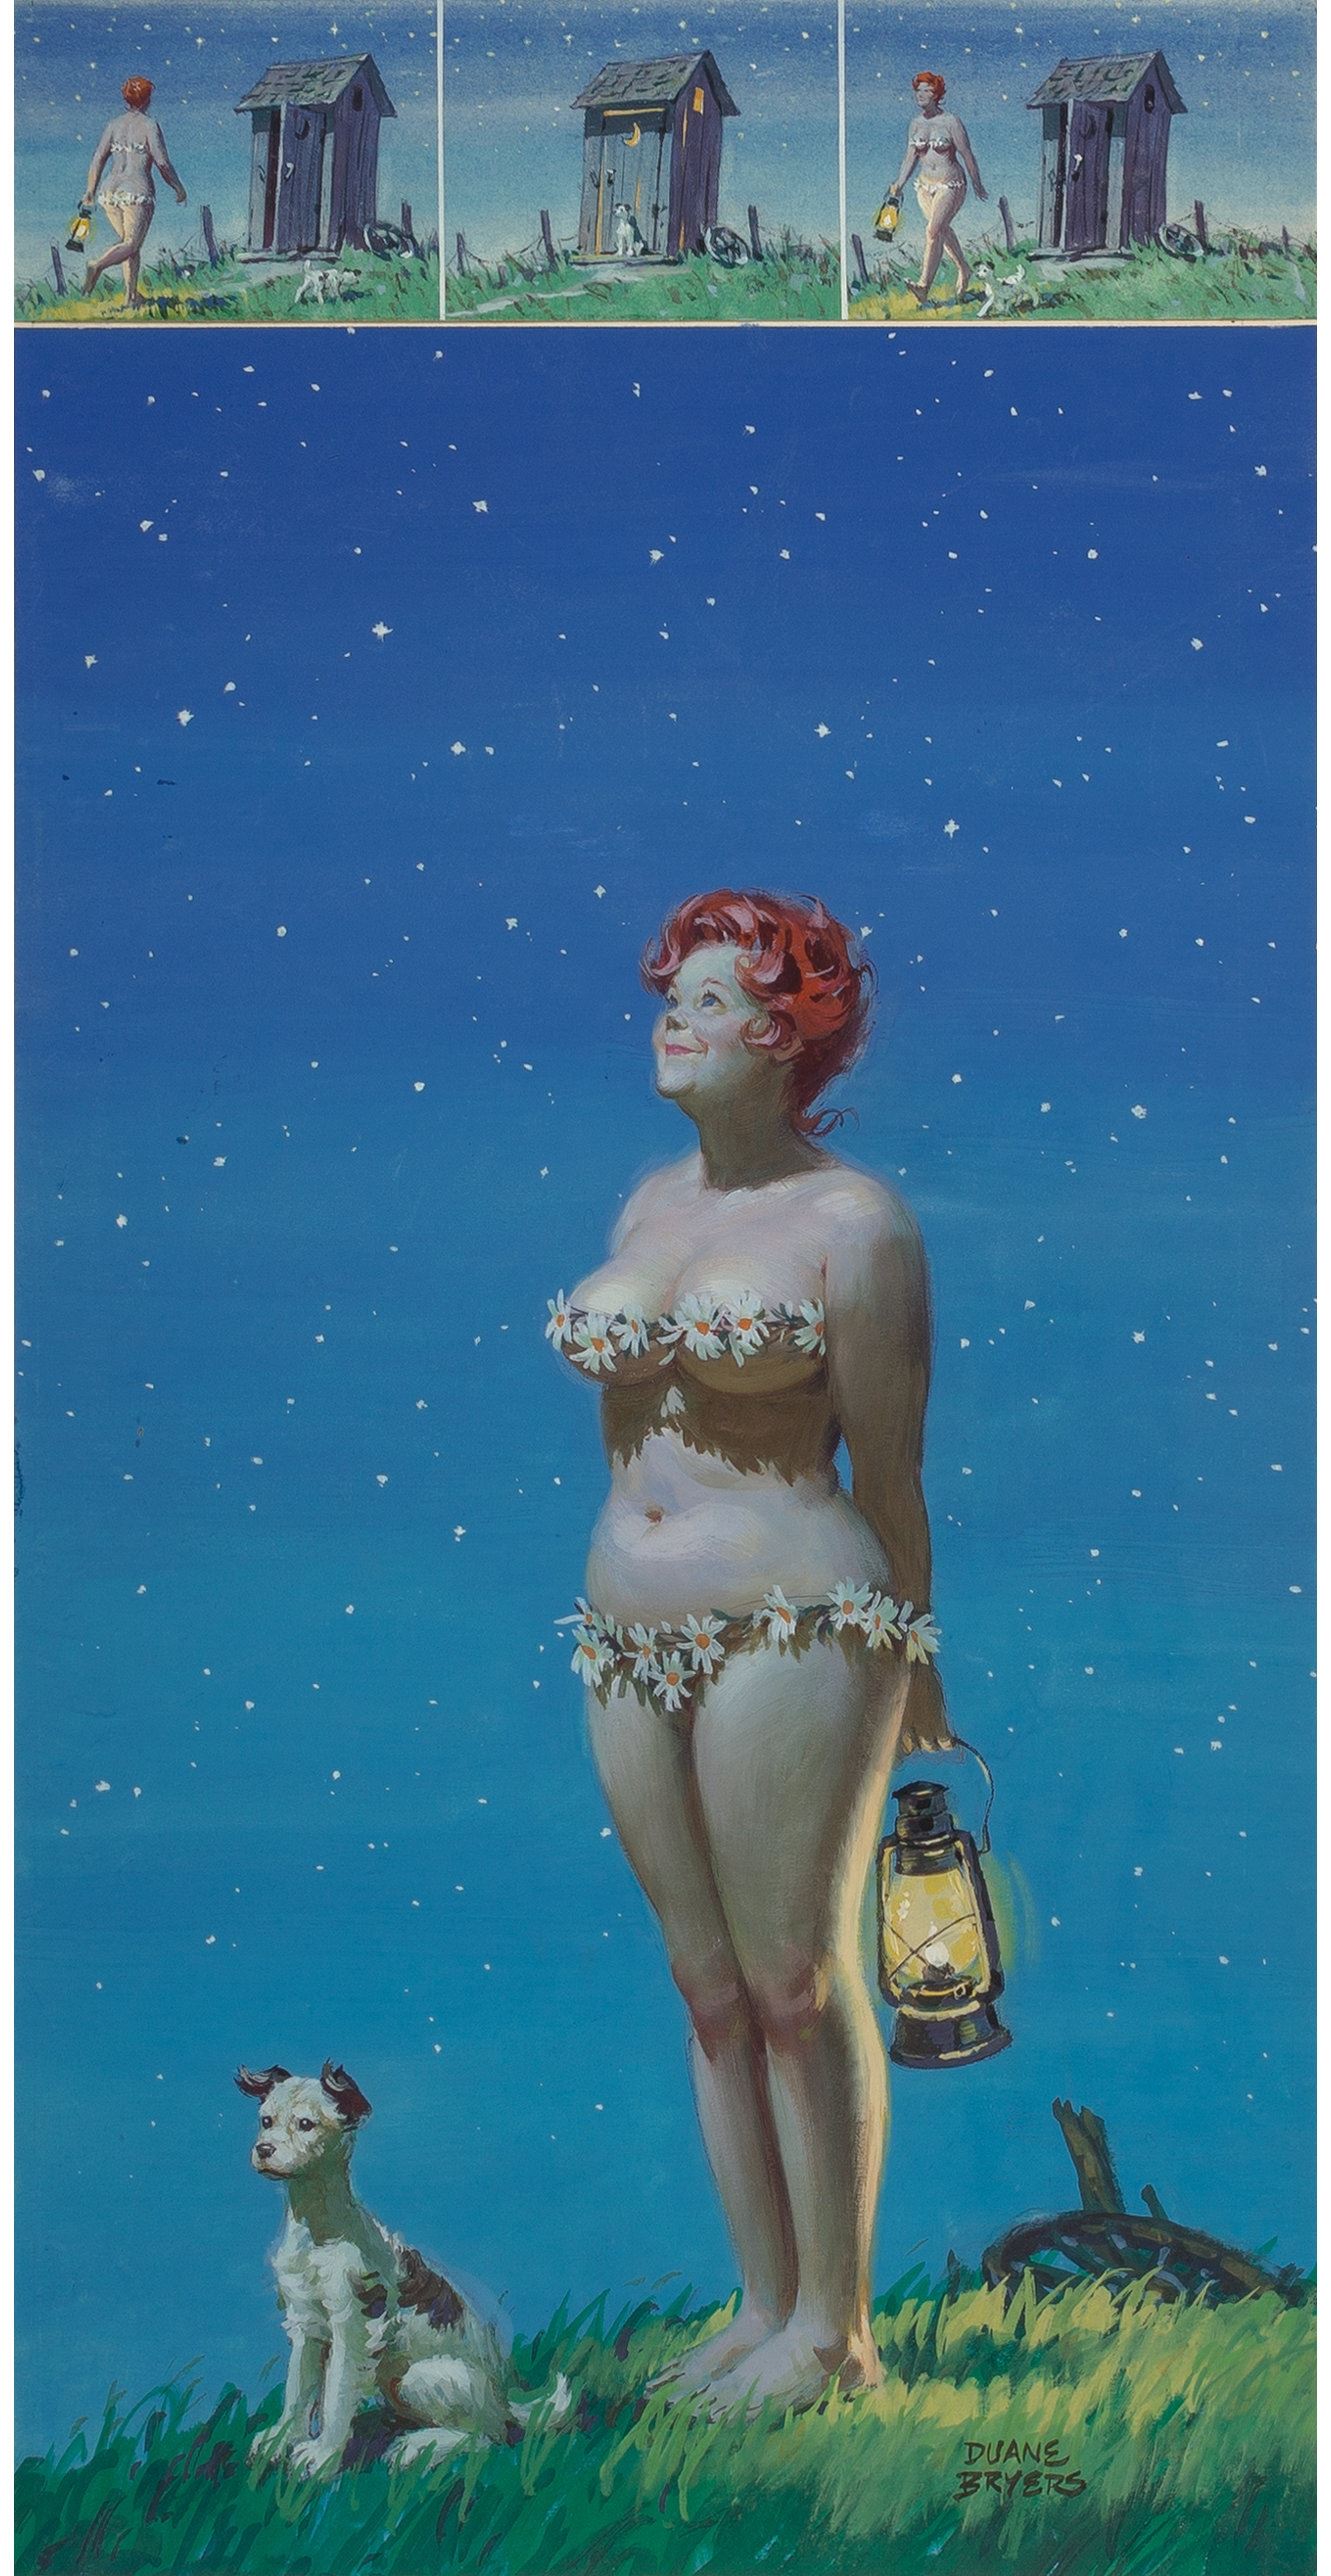 Artwork by Duane Bryers, Hilda Star Gazing, Calendar illustration, Made of Gouache on board